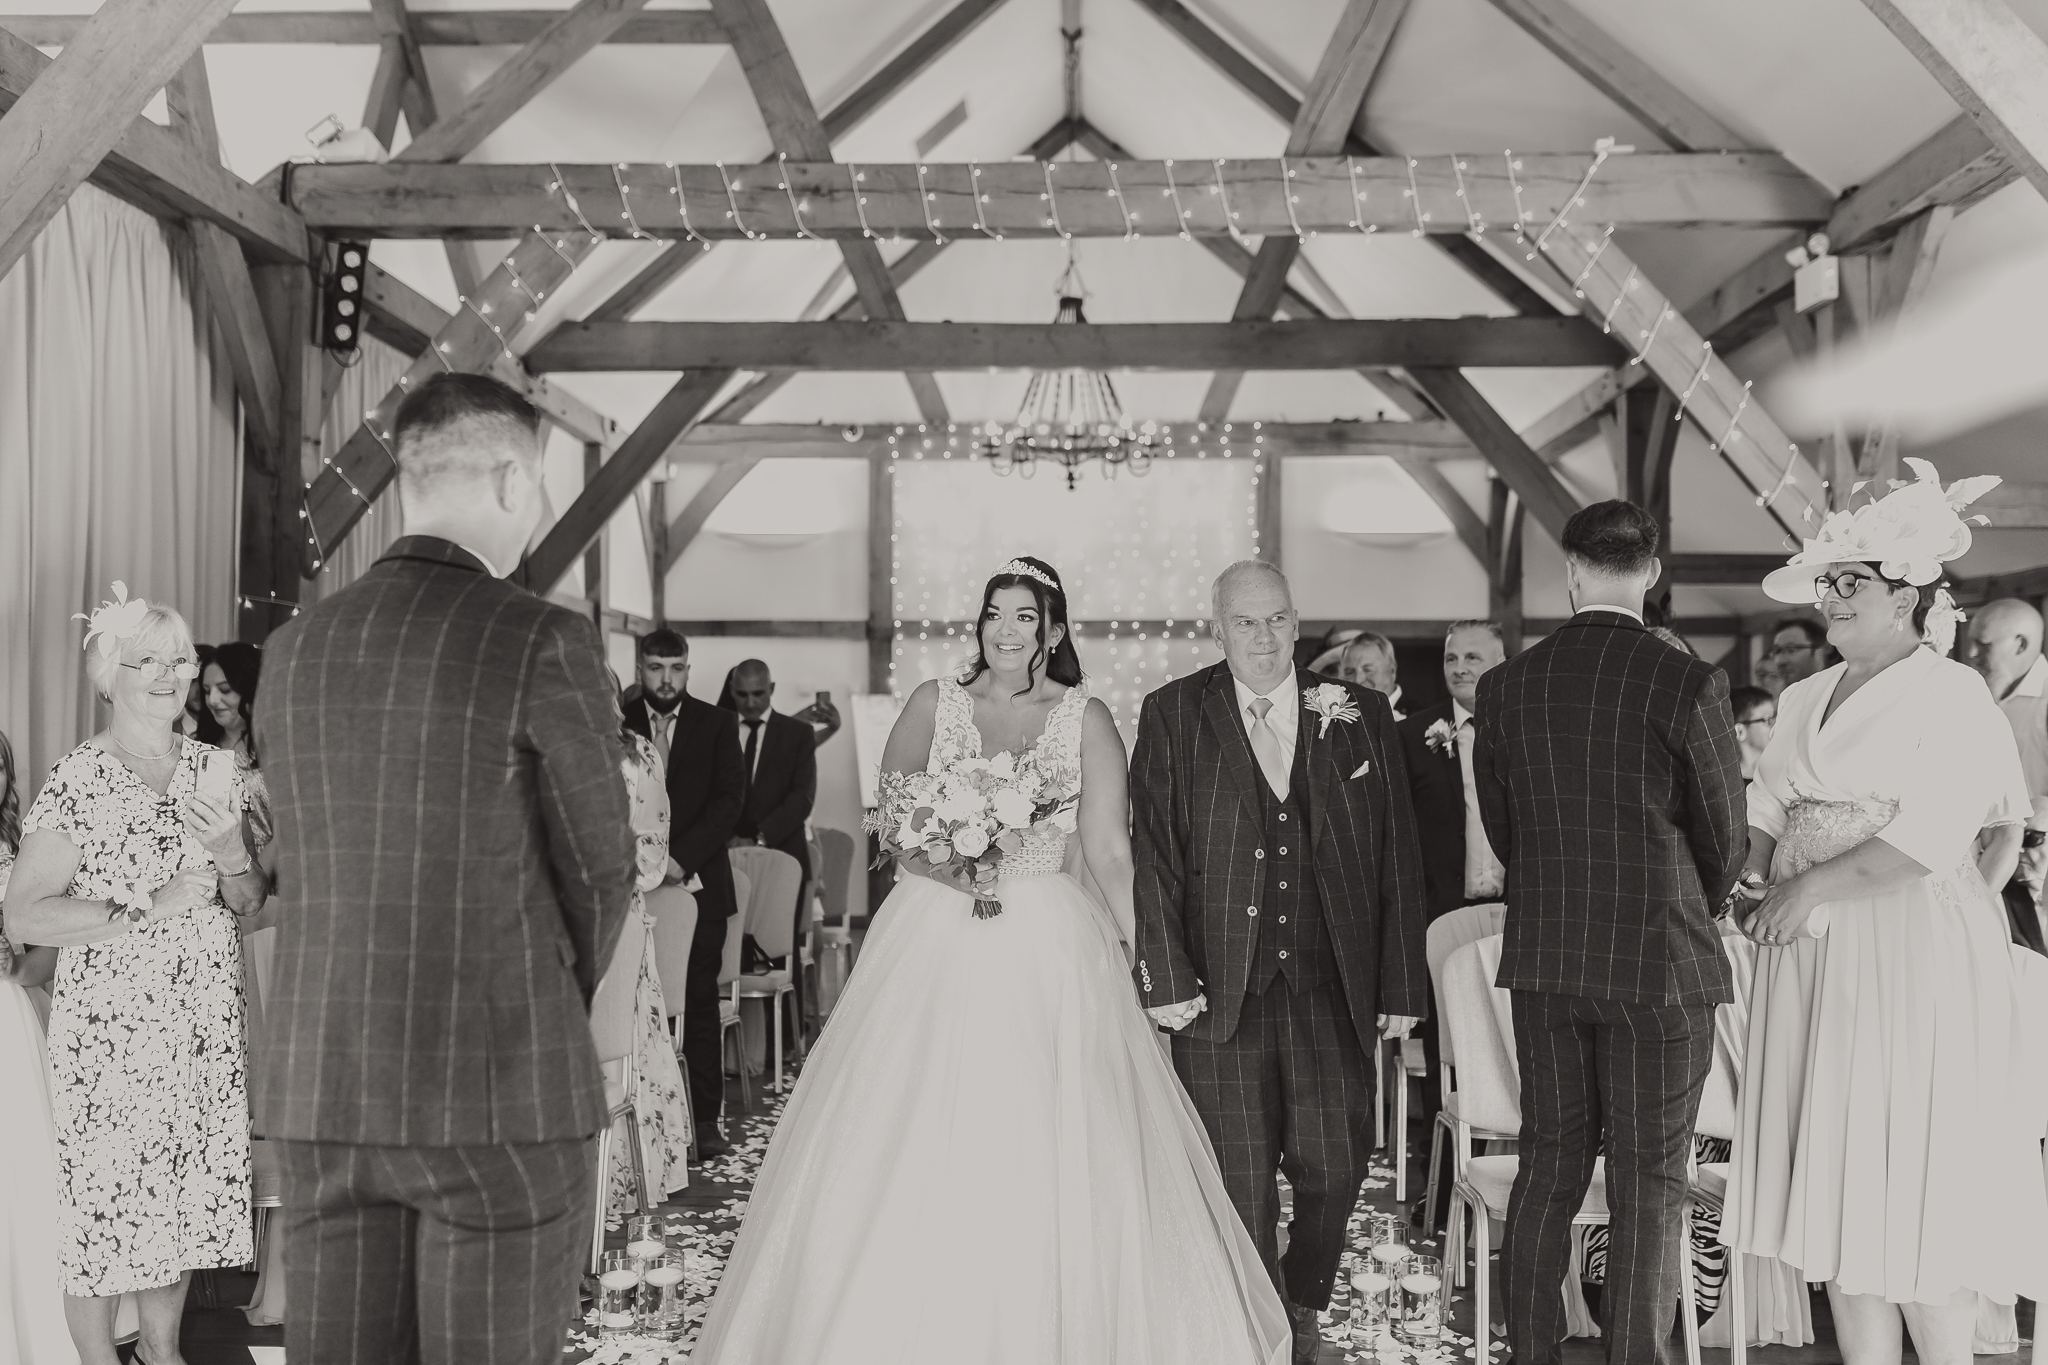 Aimee walking down the aisle at rustic wedding venue Sandhole Oak Wedding Barn, captured by Cheshire wedding photographer, Sophie Siddons